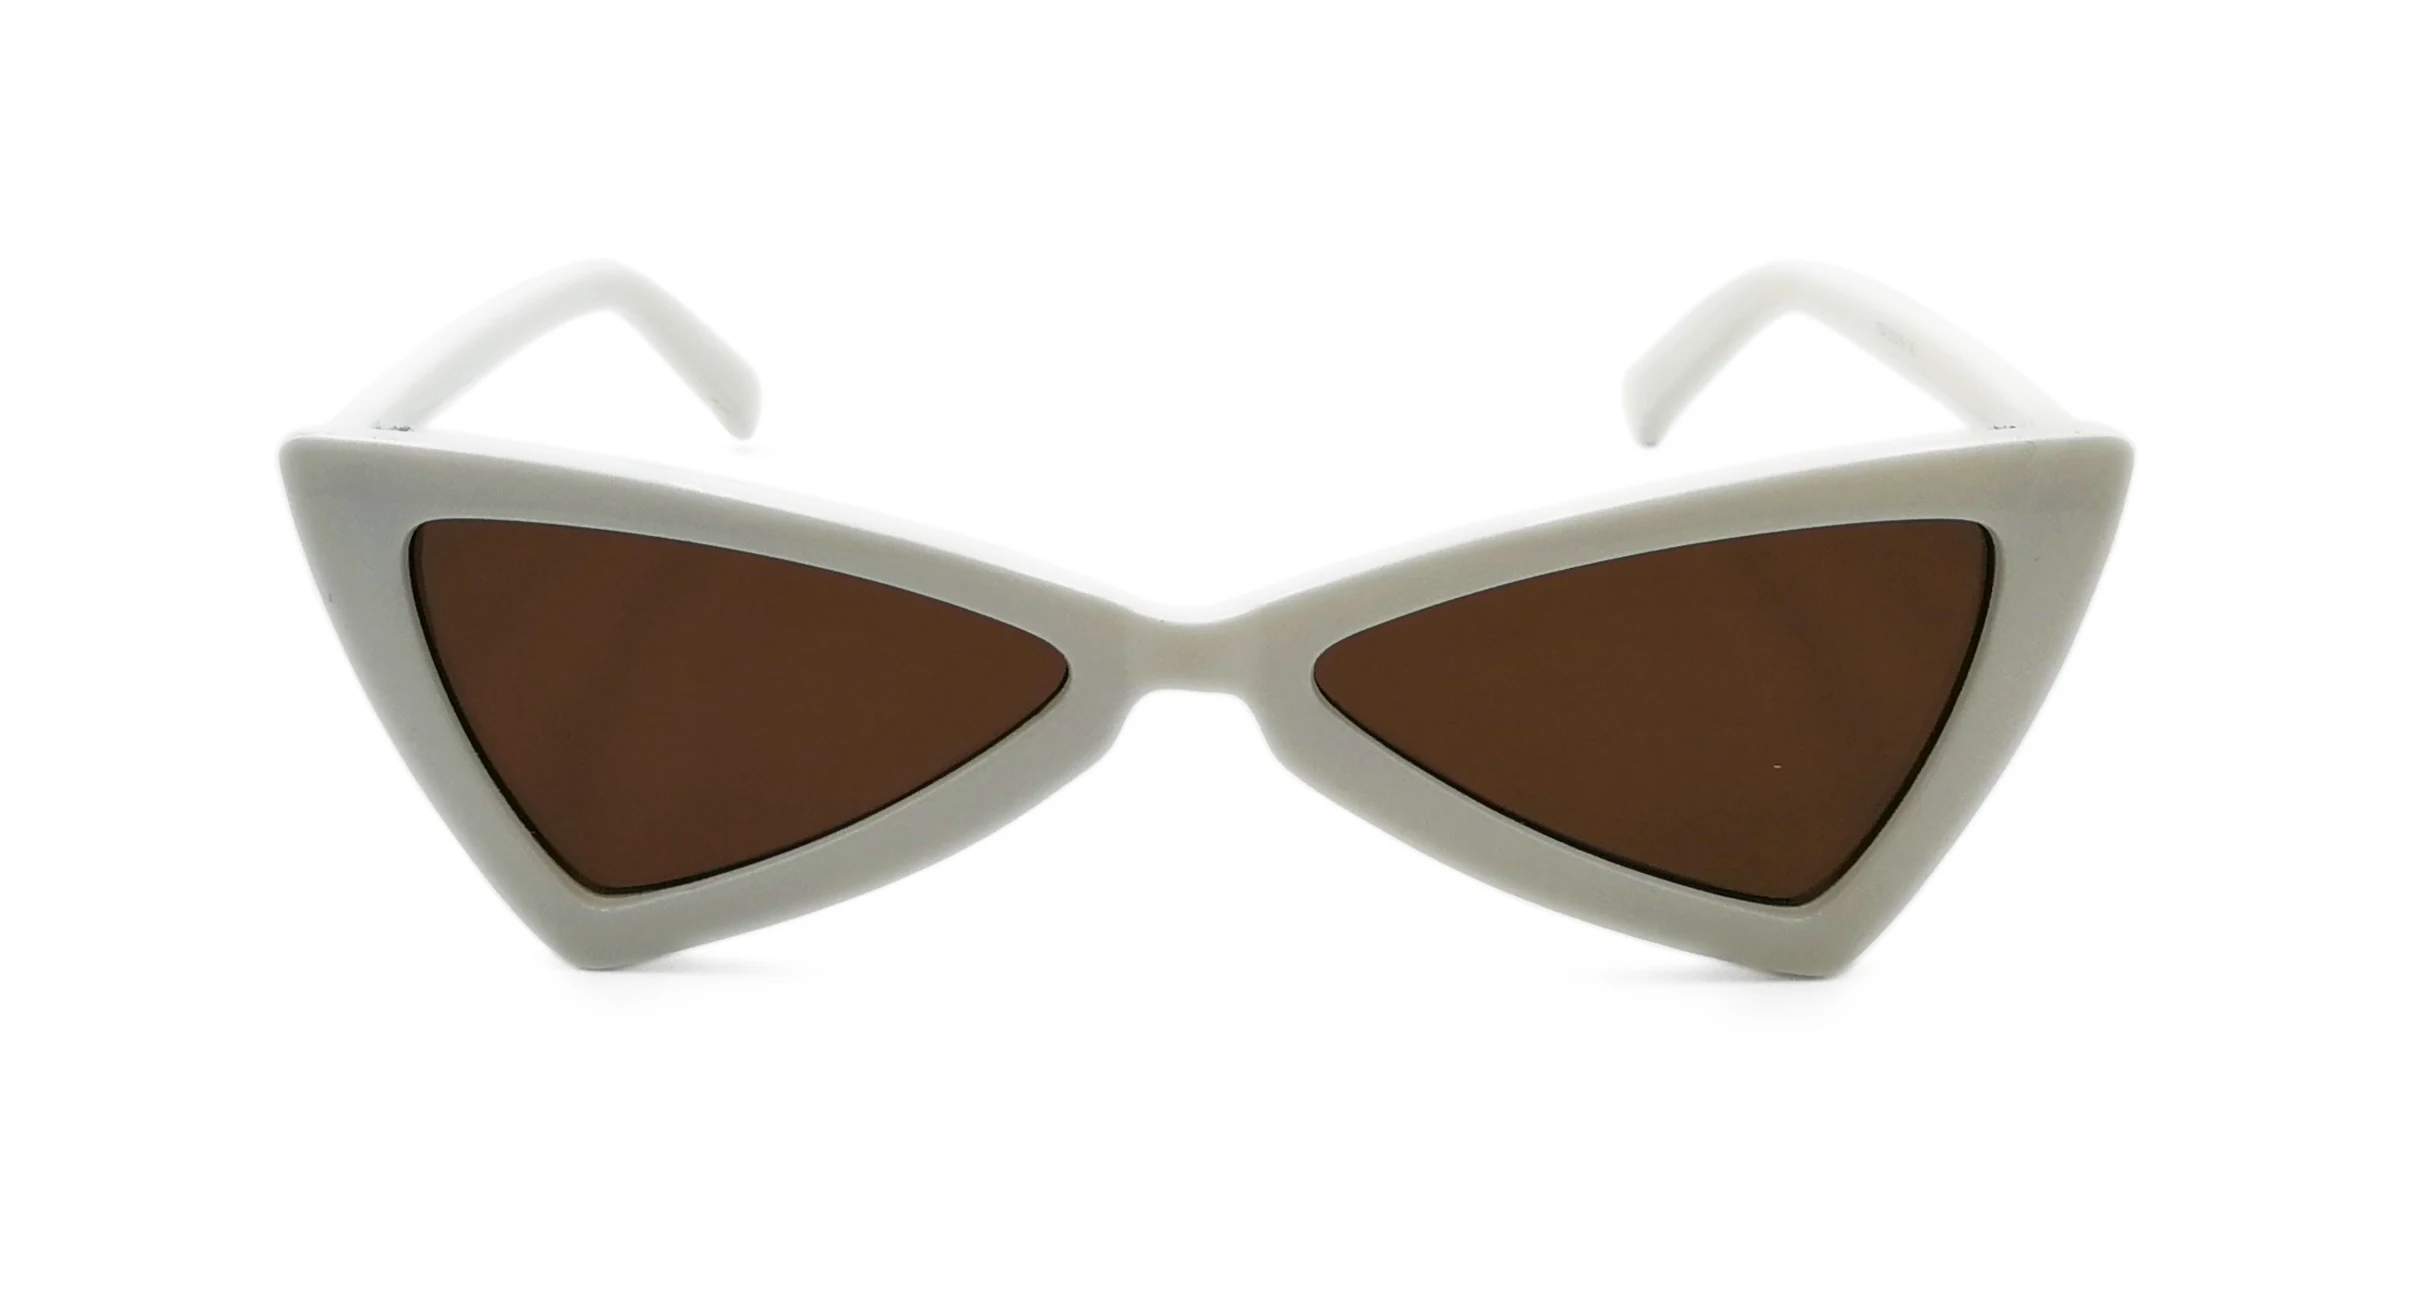 Eugenia beautiful design oversized cat eye sunglasses for Travel-17